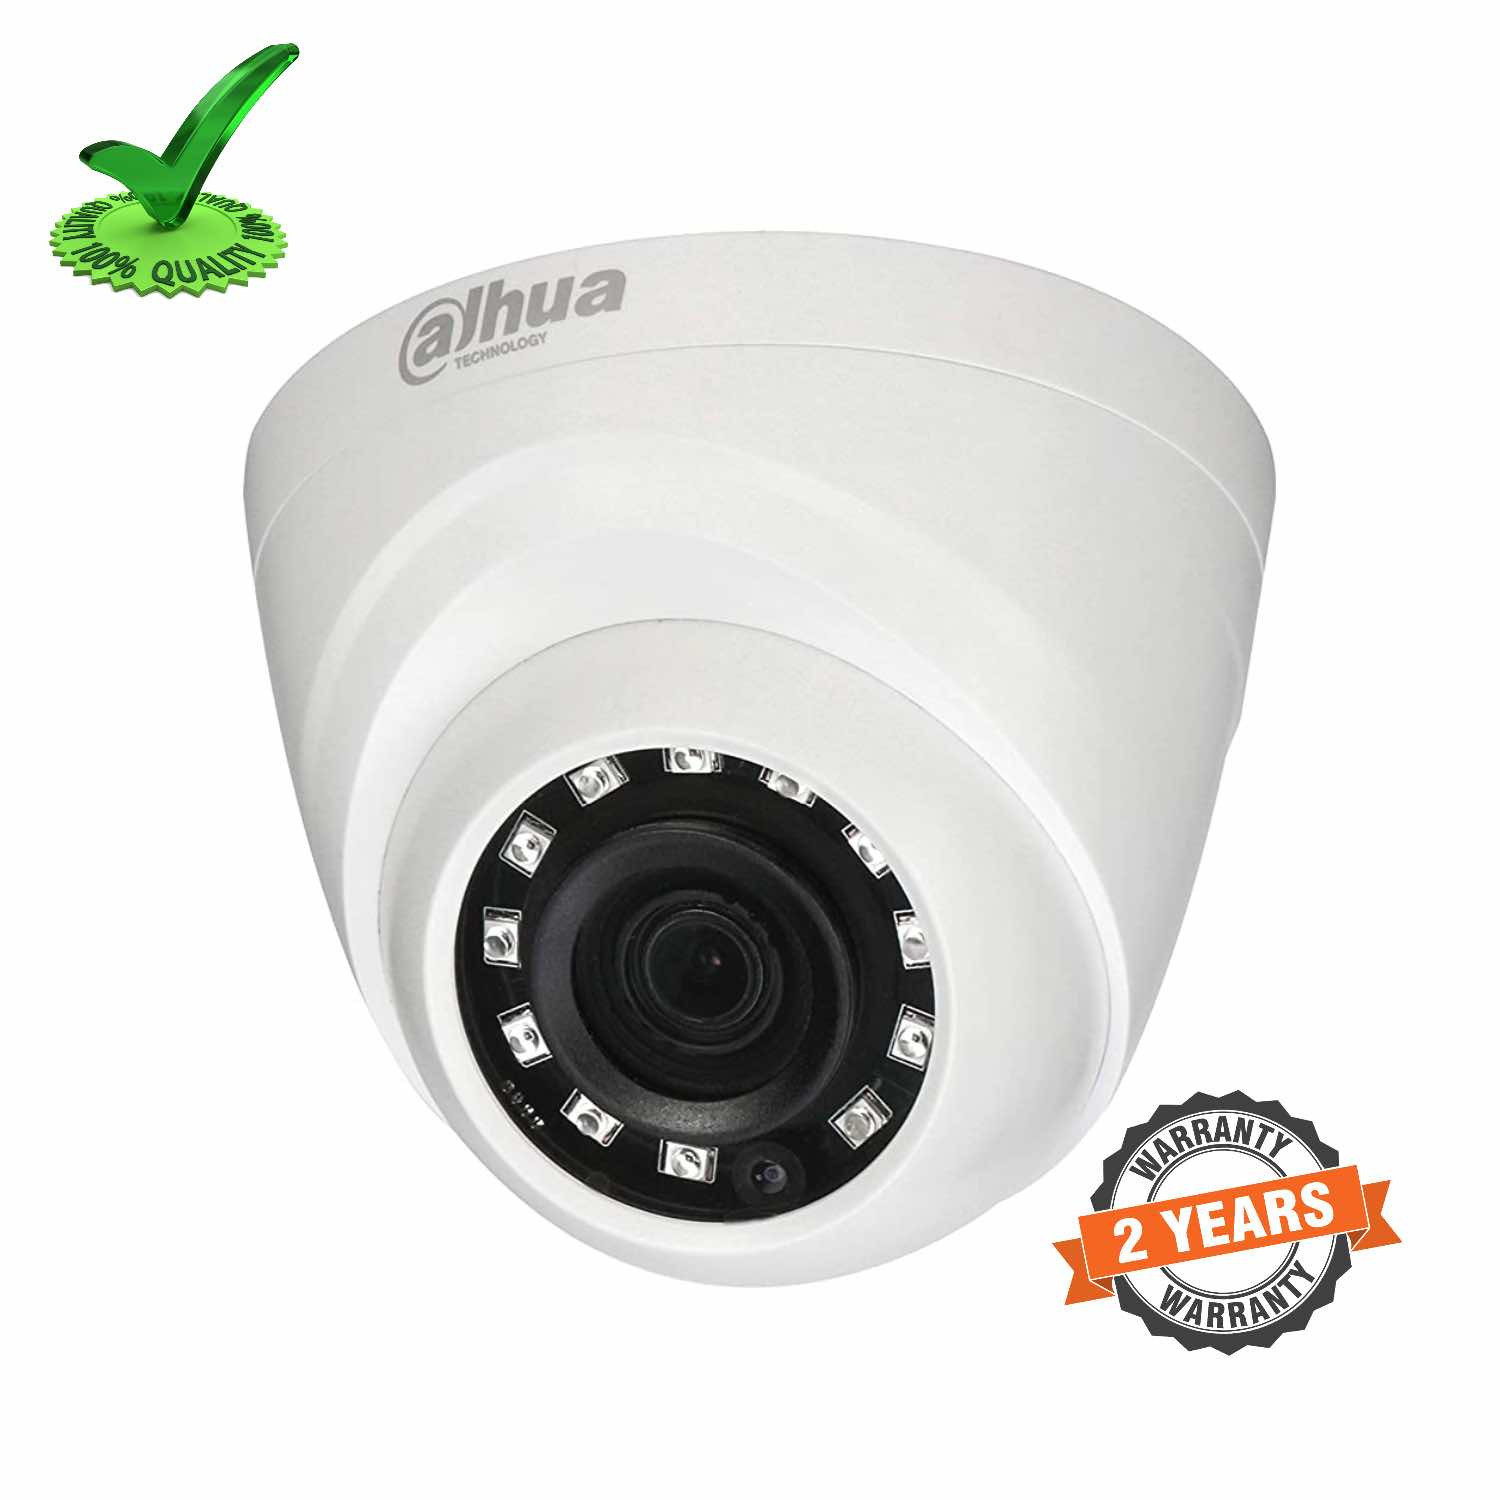 Dahua DH-HAC-HDW1220SP 2mp FHD IR Eyeball Dome Camera